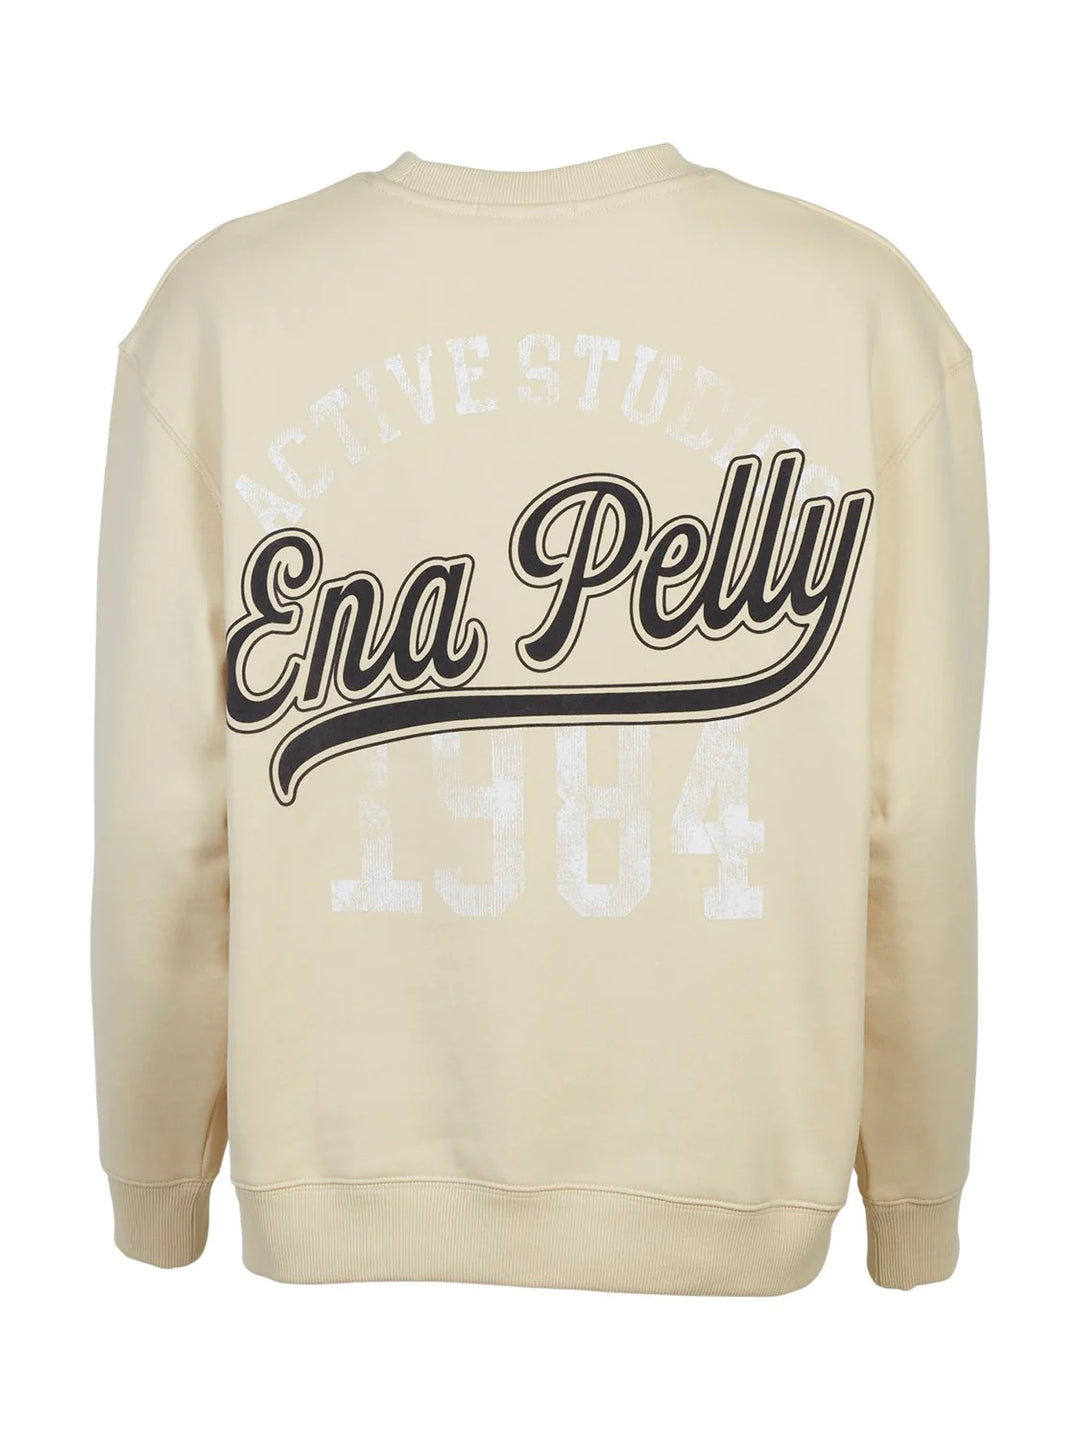 Ena Pelly EP Captain Oversized Sweater - French Vanilla